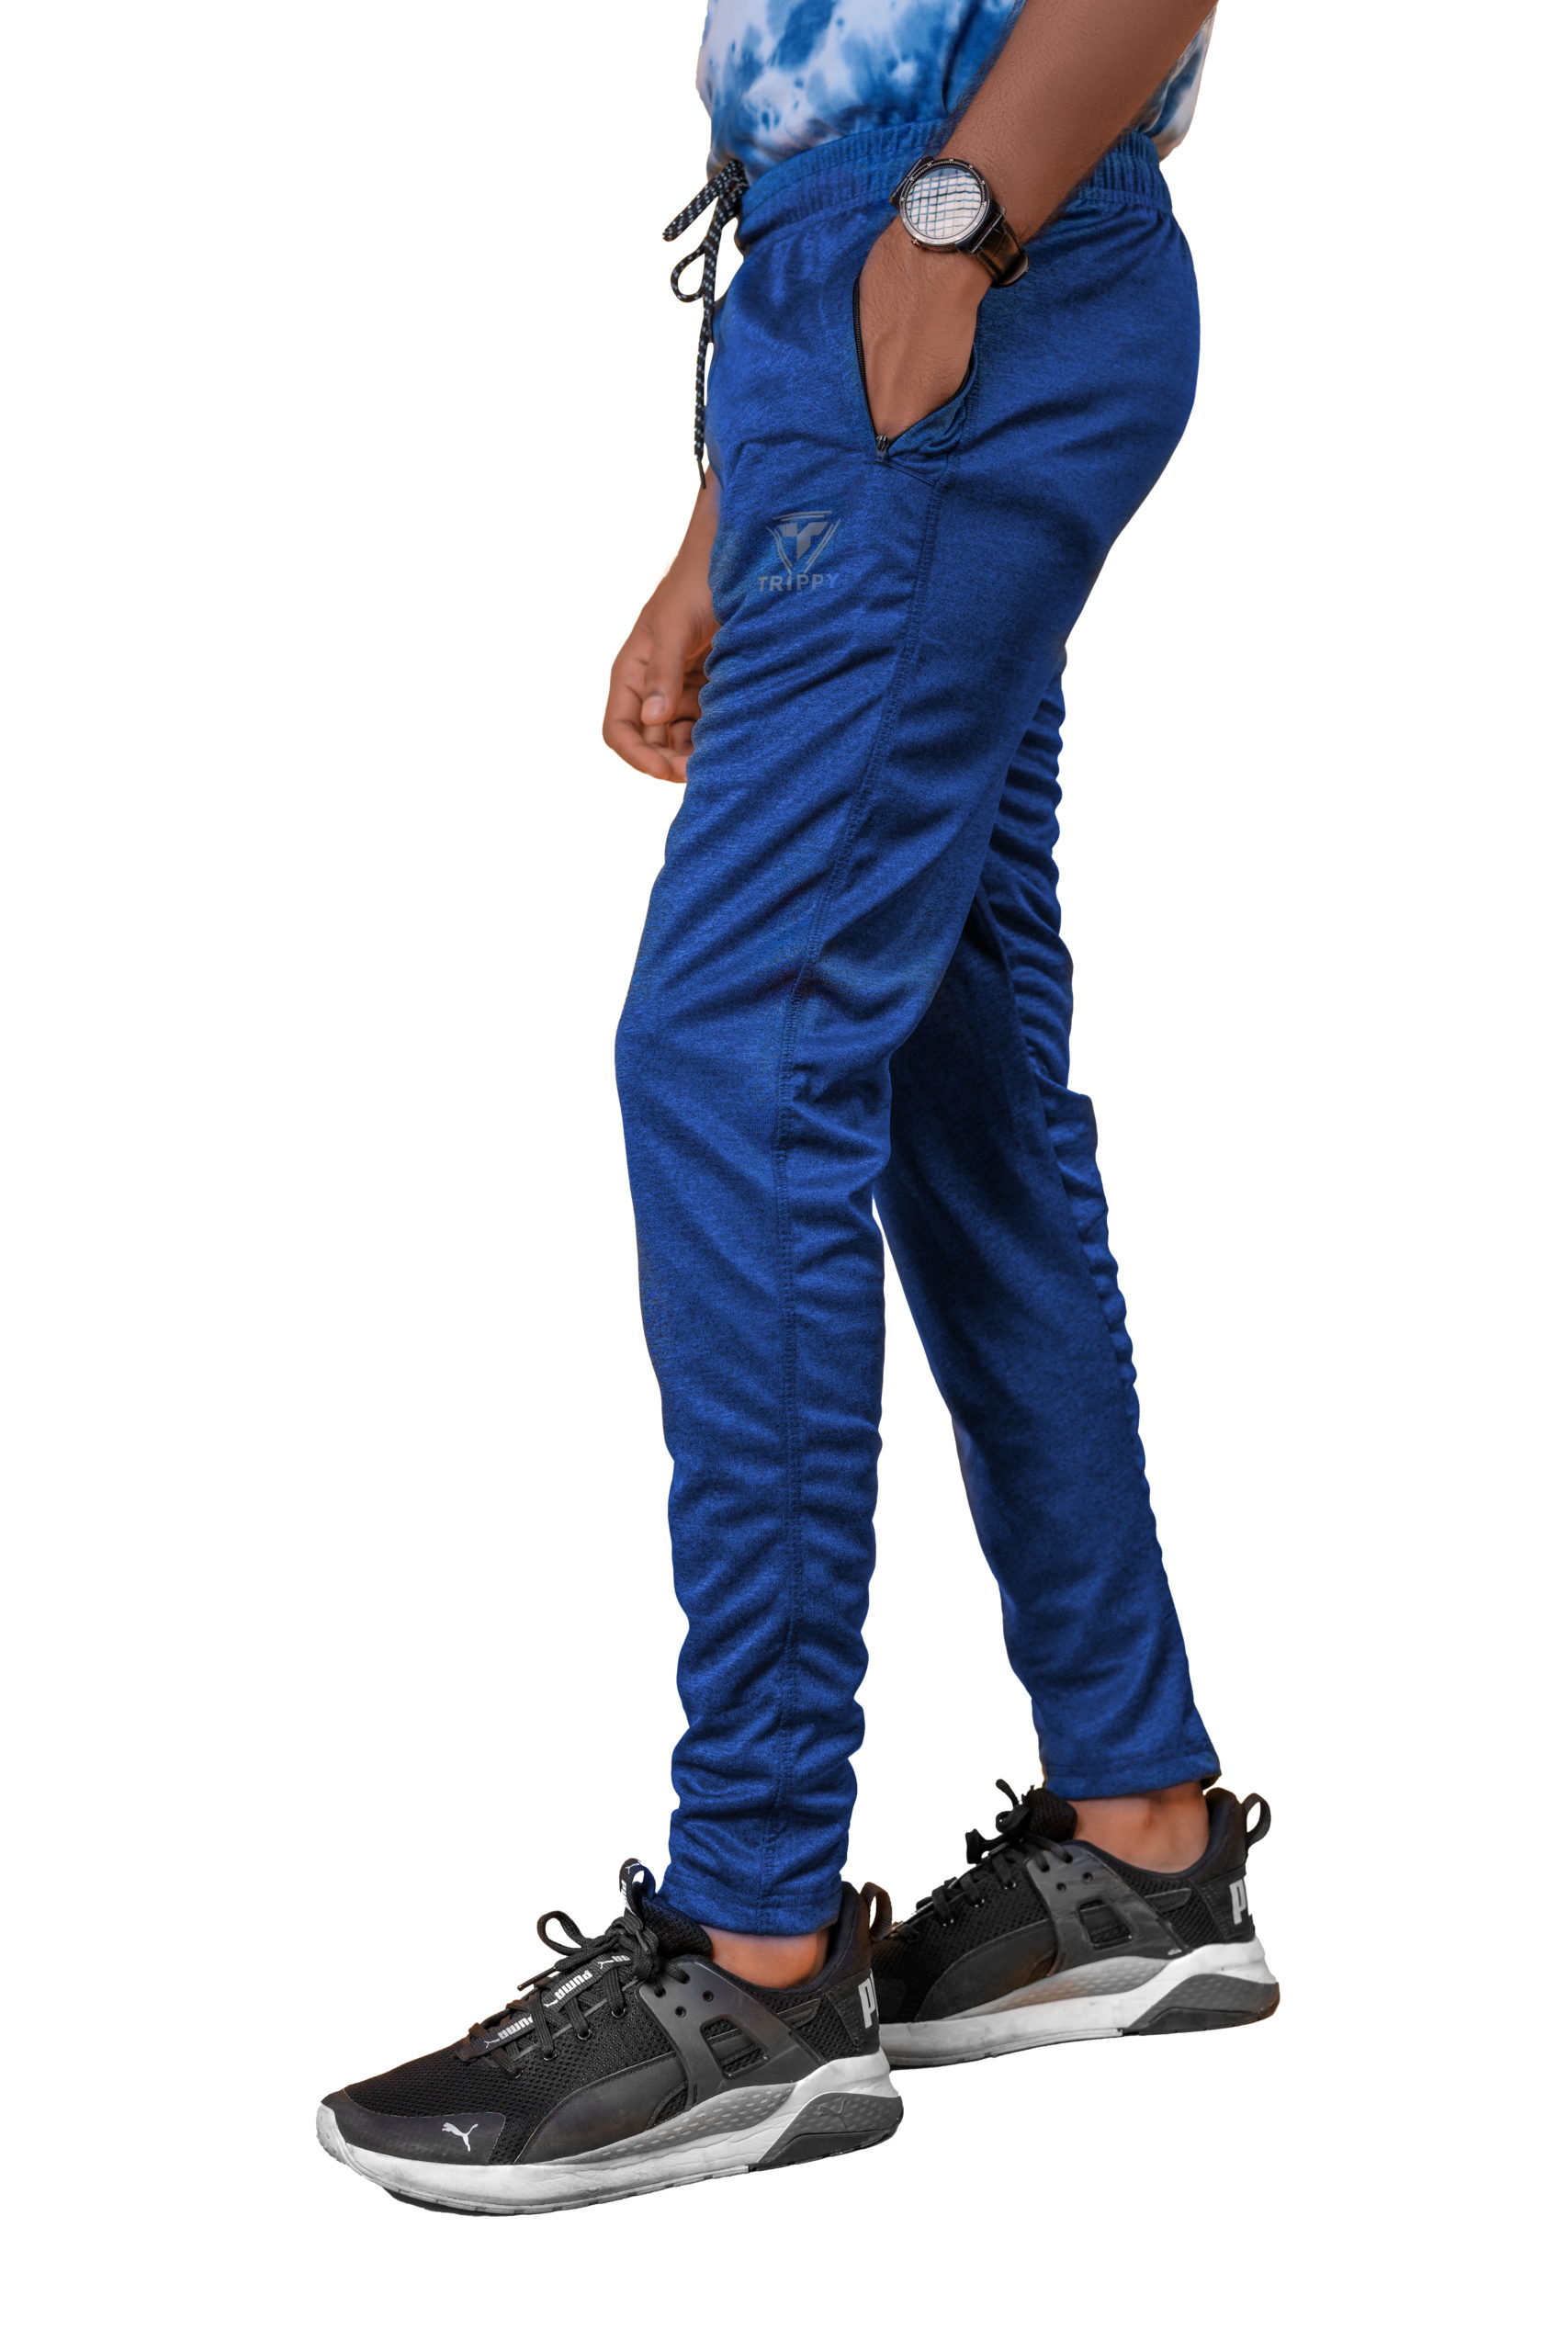 Buy Men Teal Blue Smart Fit Track Pant Online in India - Rock.it